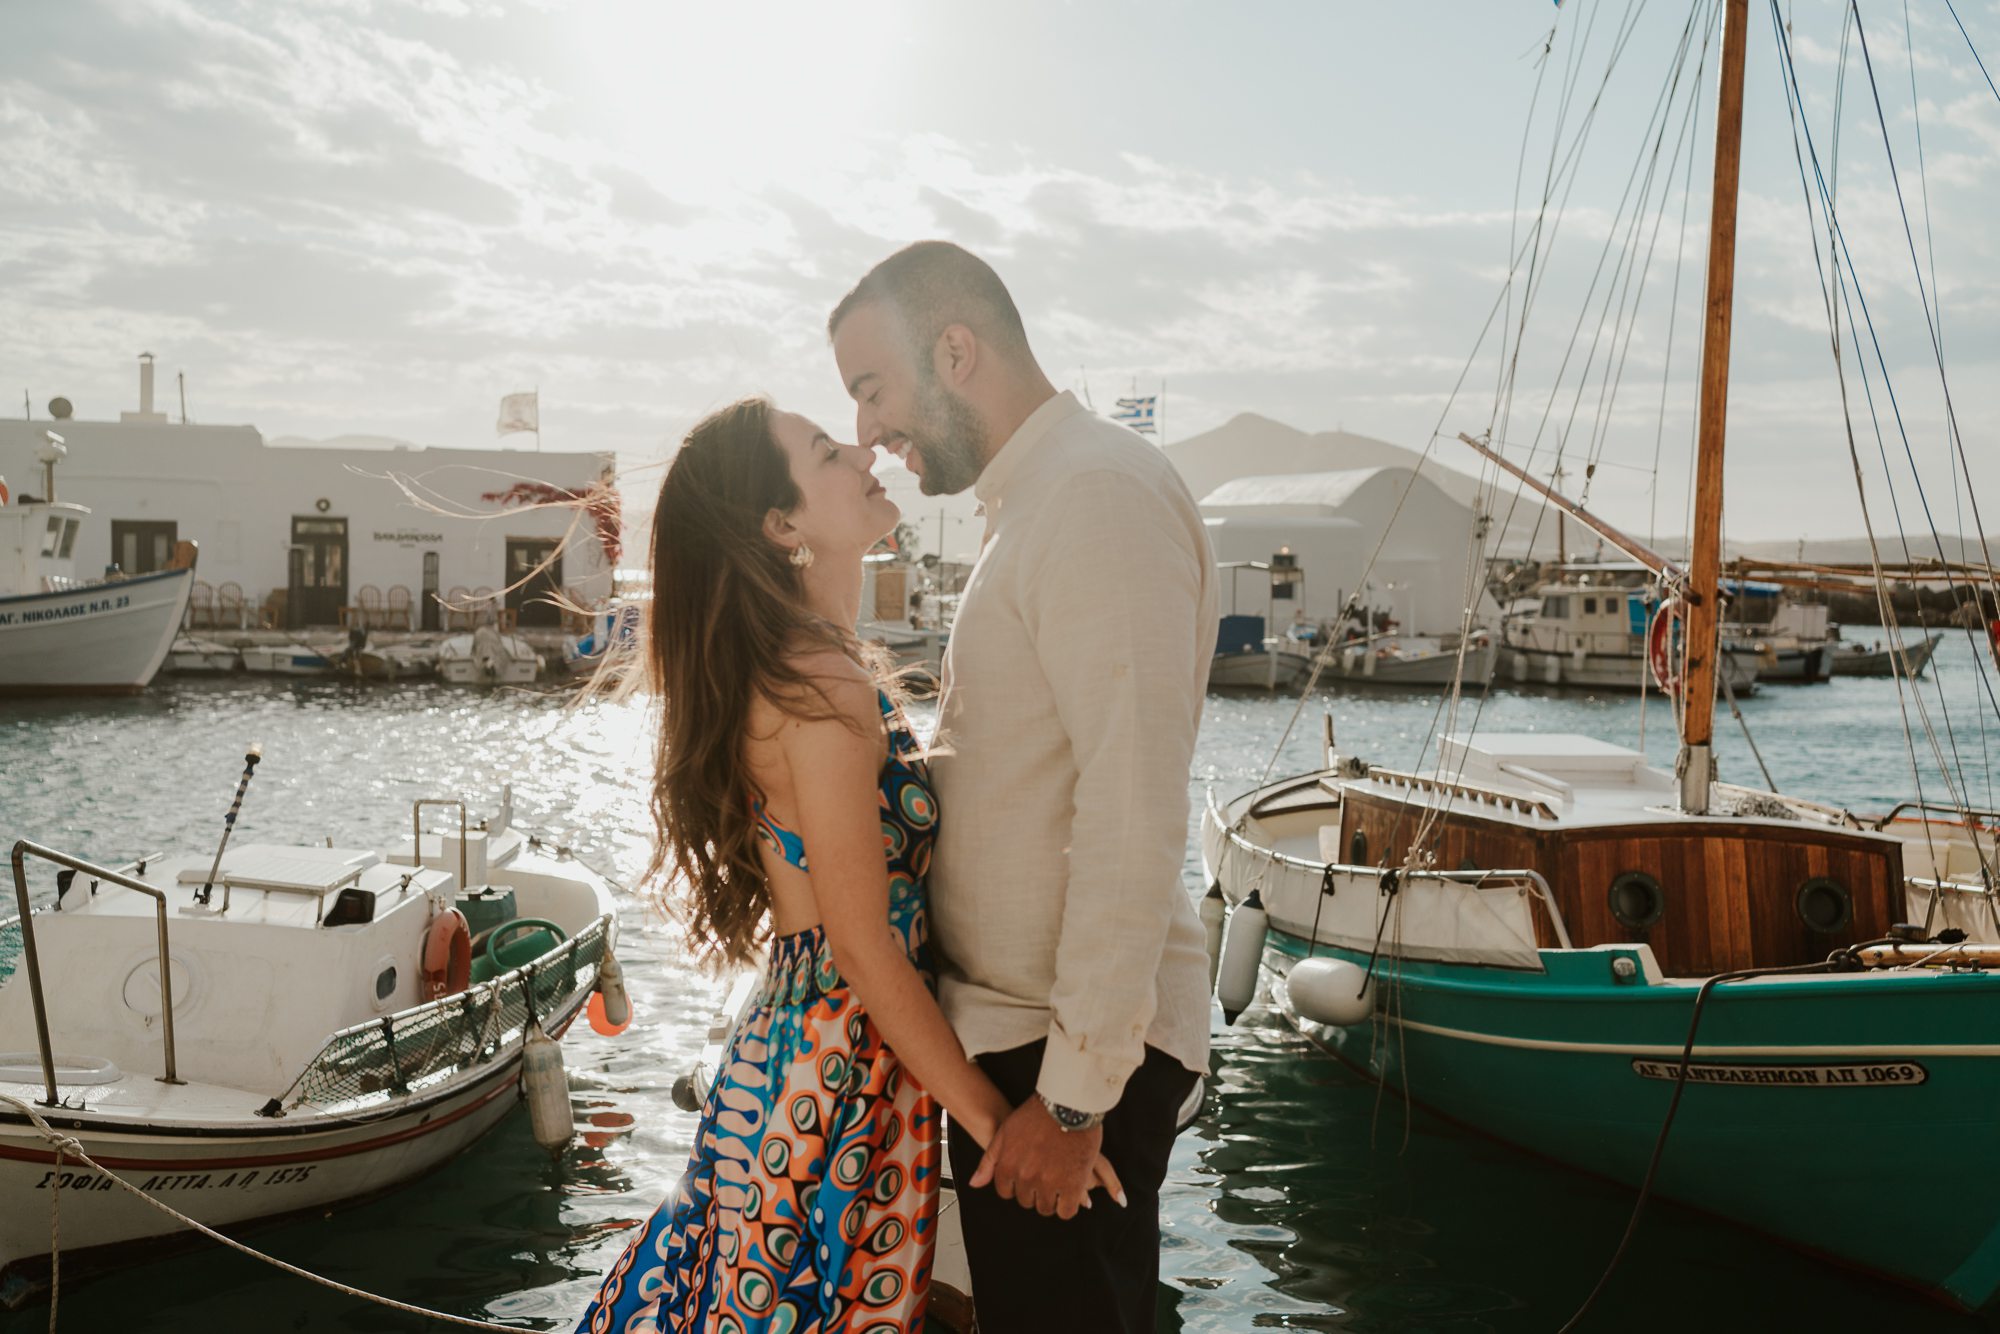 Pre-Wedding Photoshoot in Paros